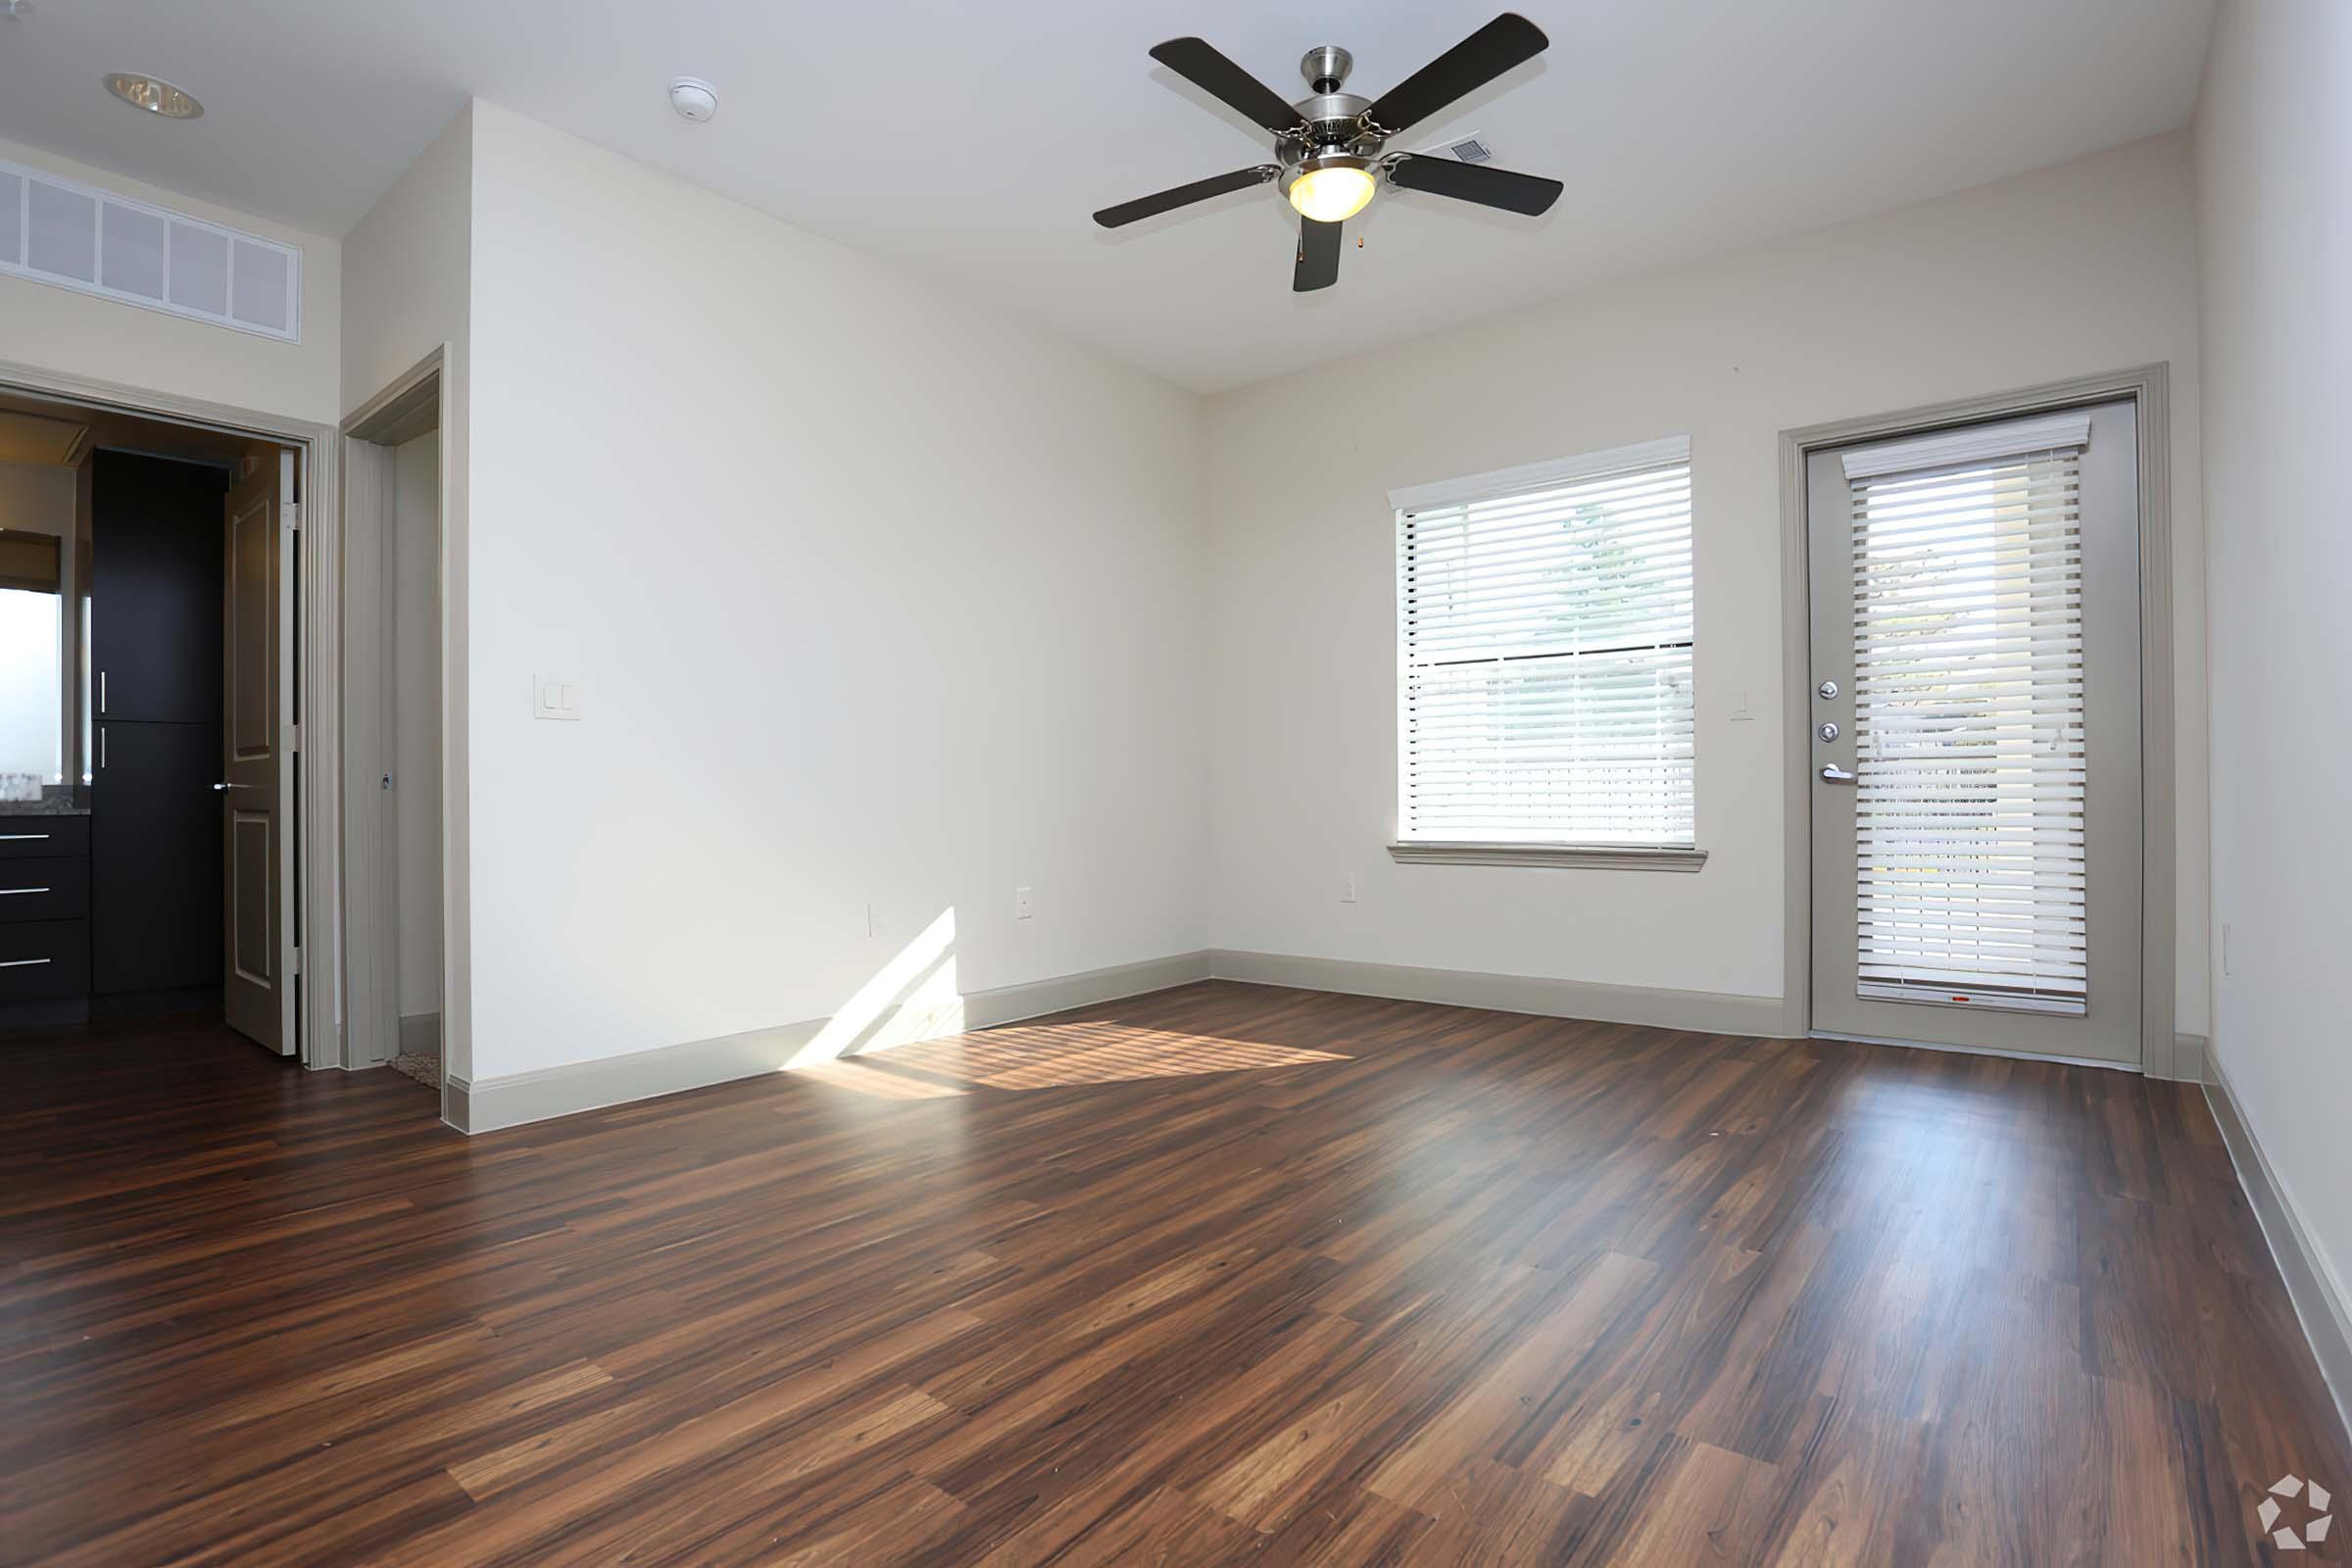 a room with a hard wood floor